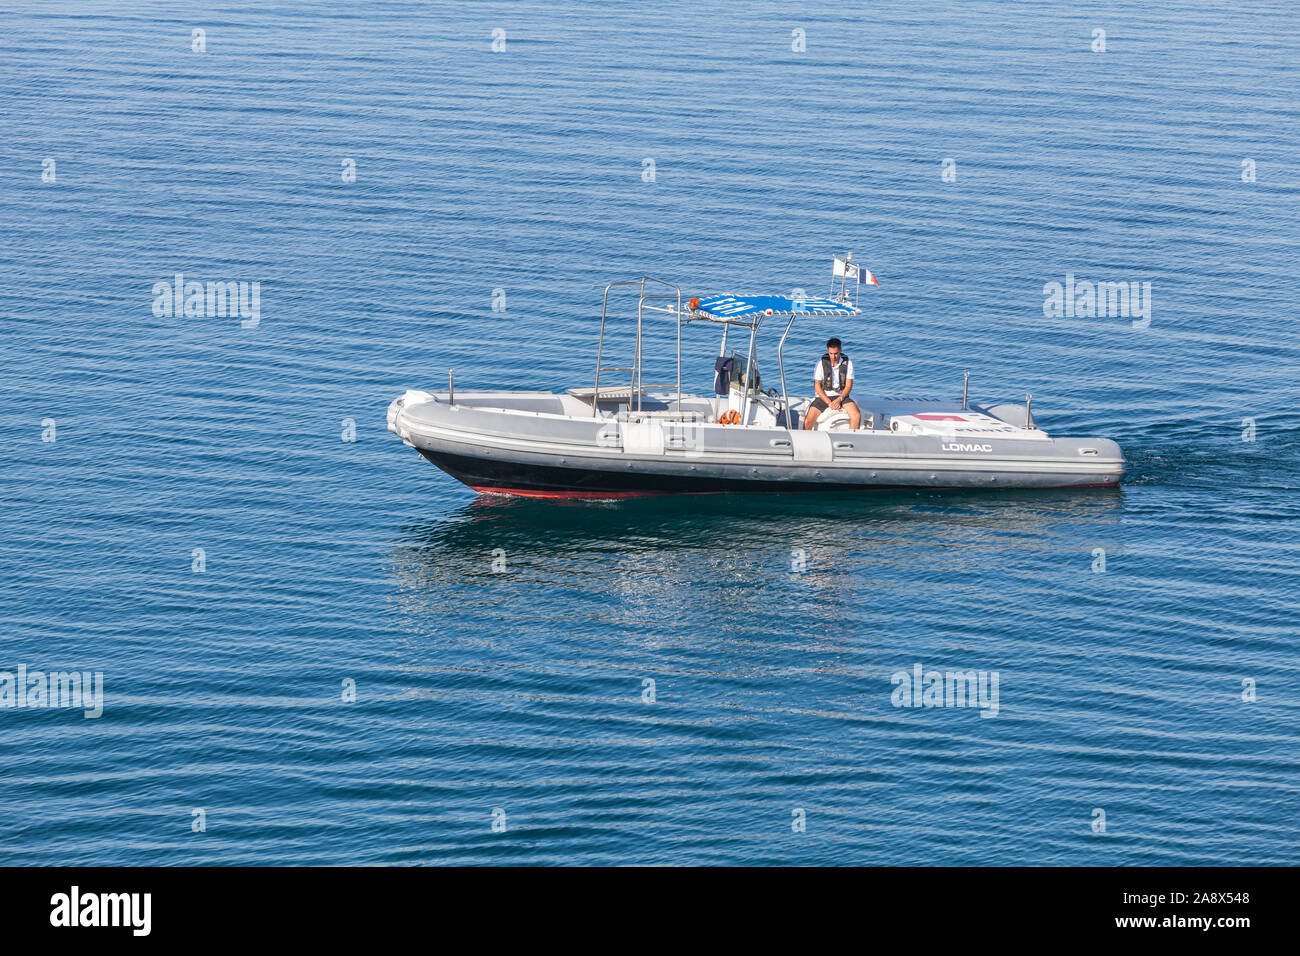 Ajaccio, France - June 30, 2015: Pilot boat with a man on board is in port of Ajaccio, Corsica Stock Photo